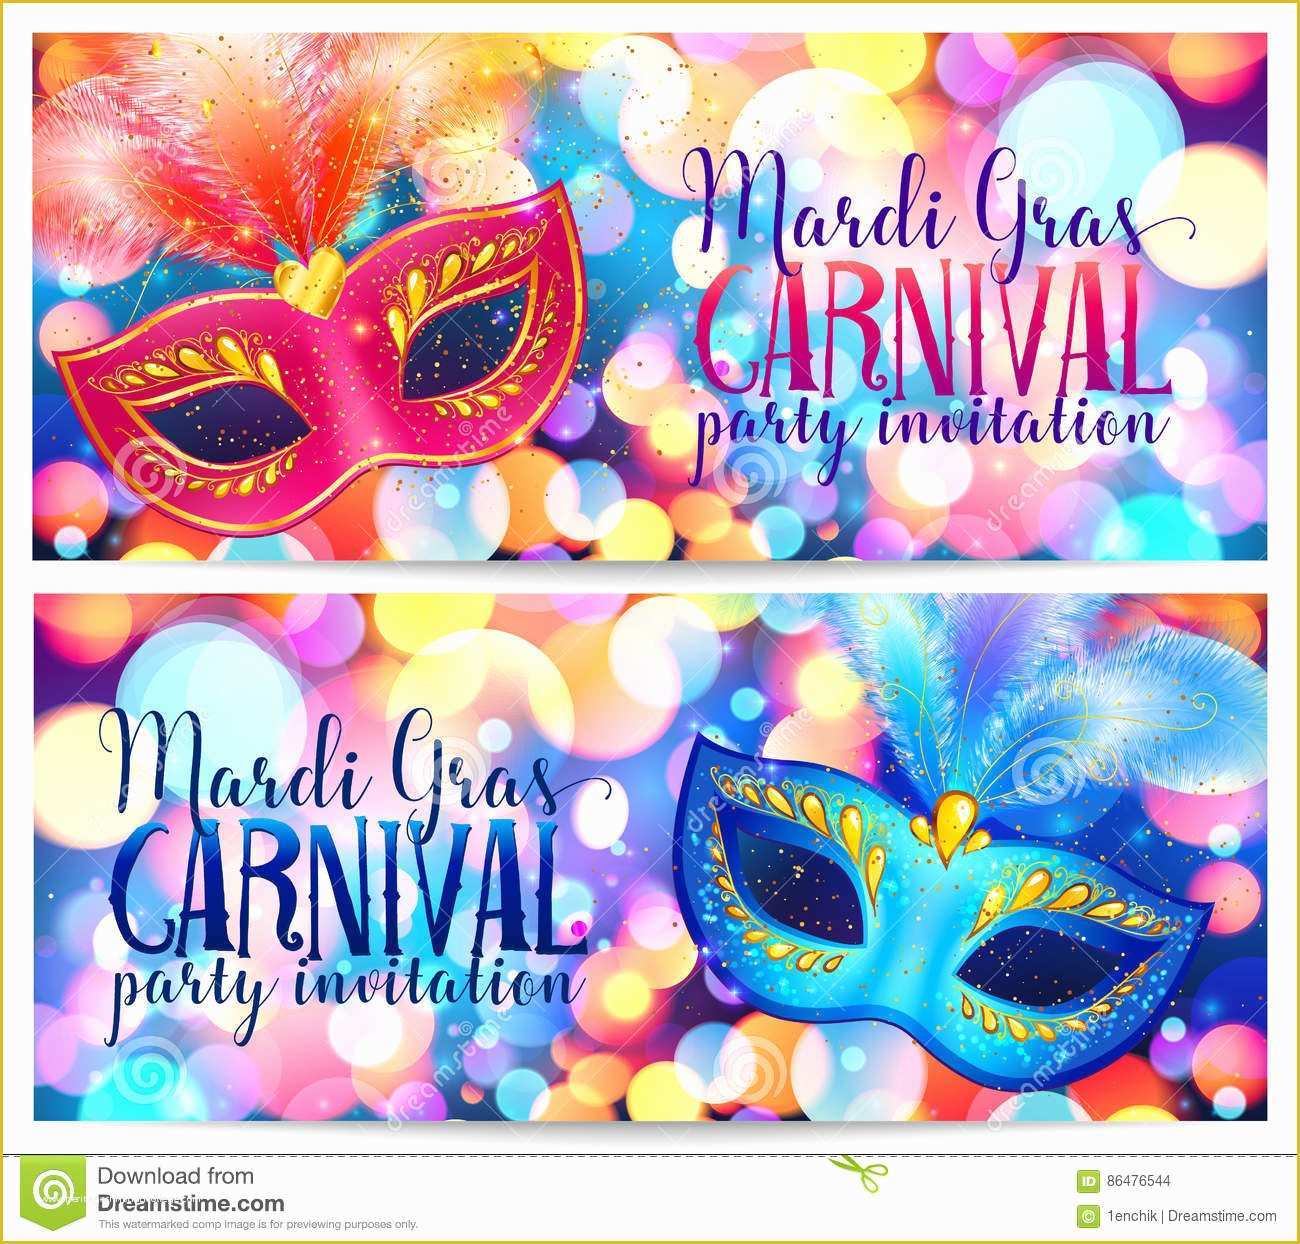 Mardi Gras Flyer Template Free Download Of Set Mardi Gras Flyers and Banners Templates with